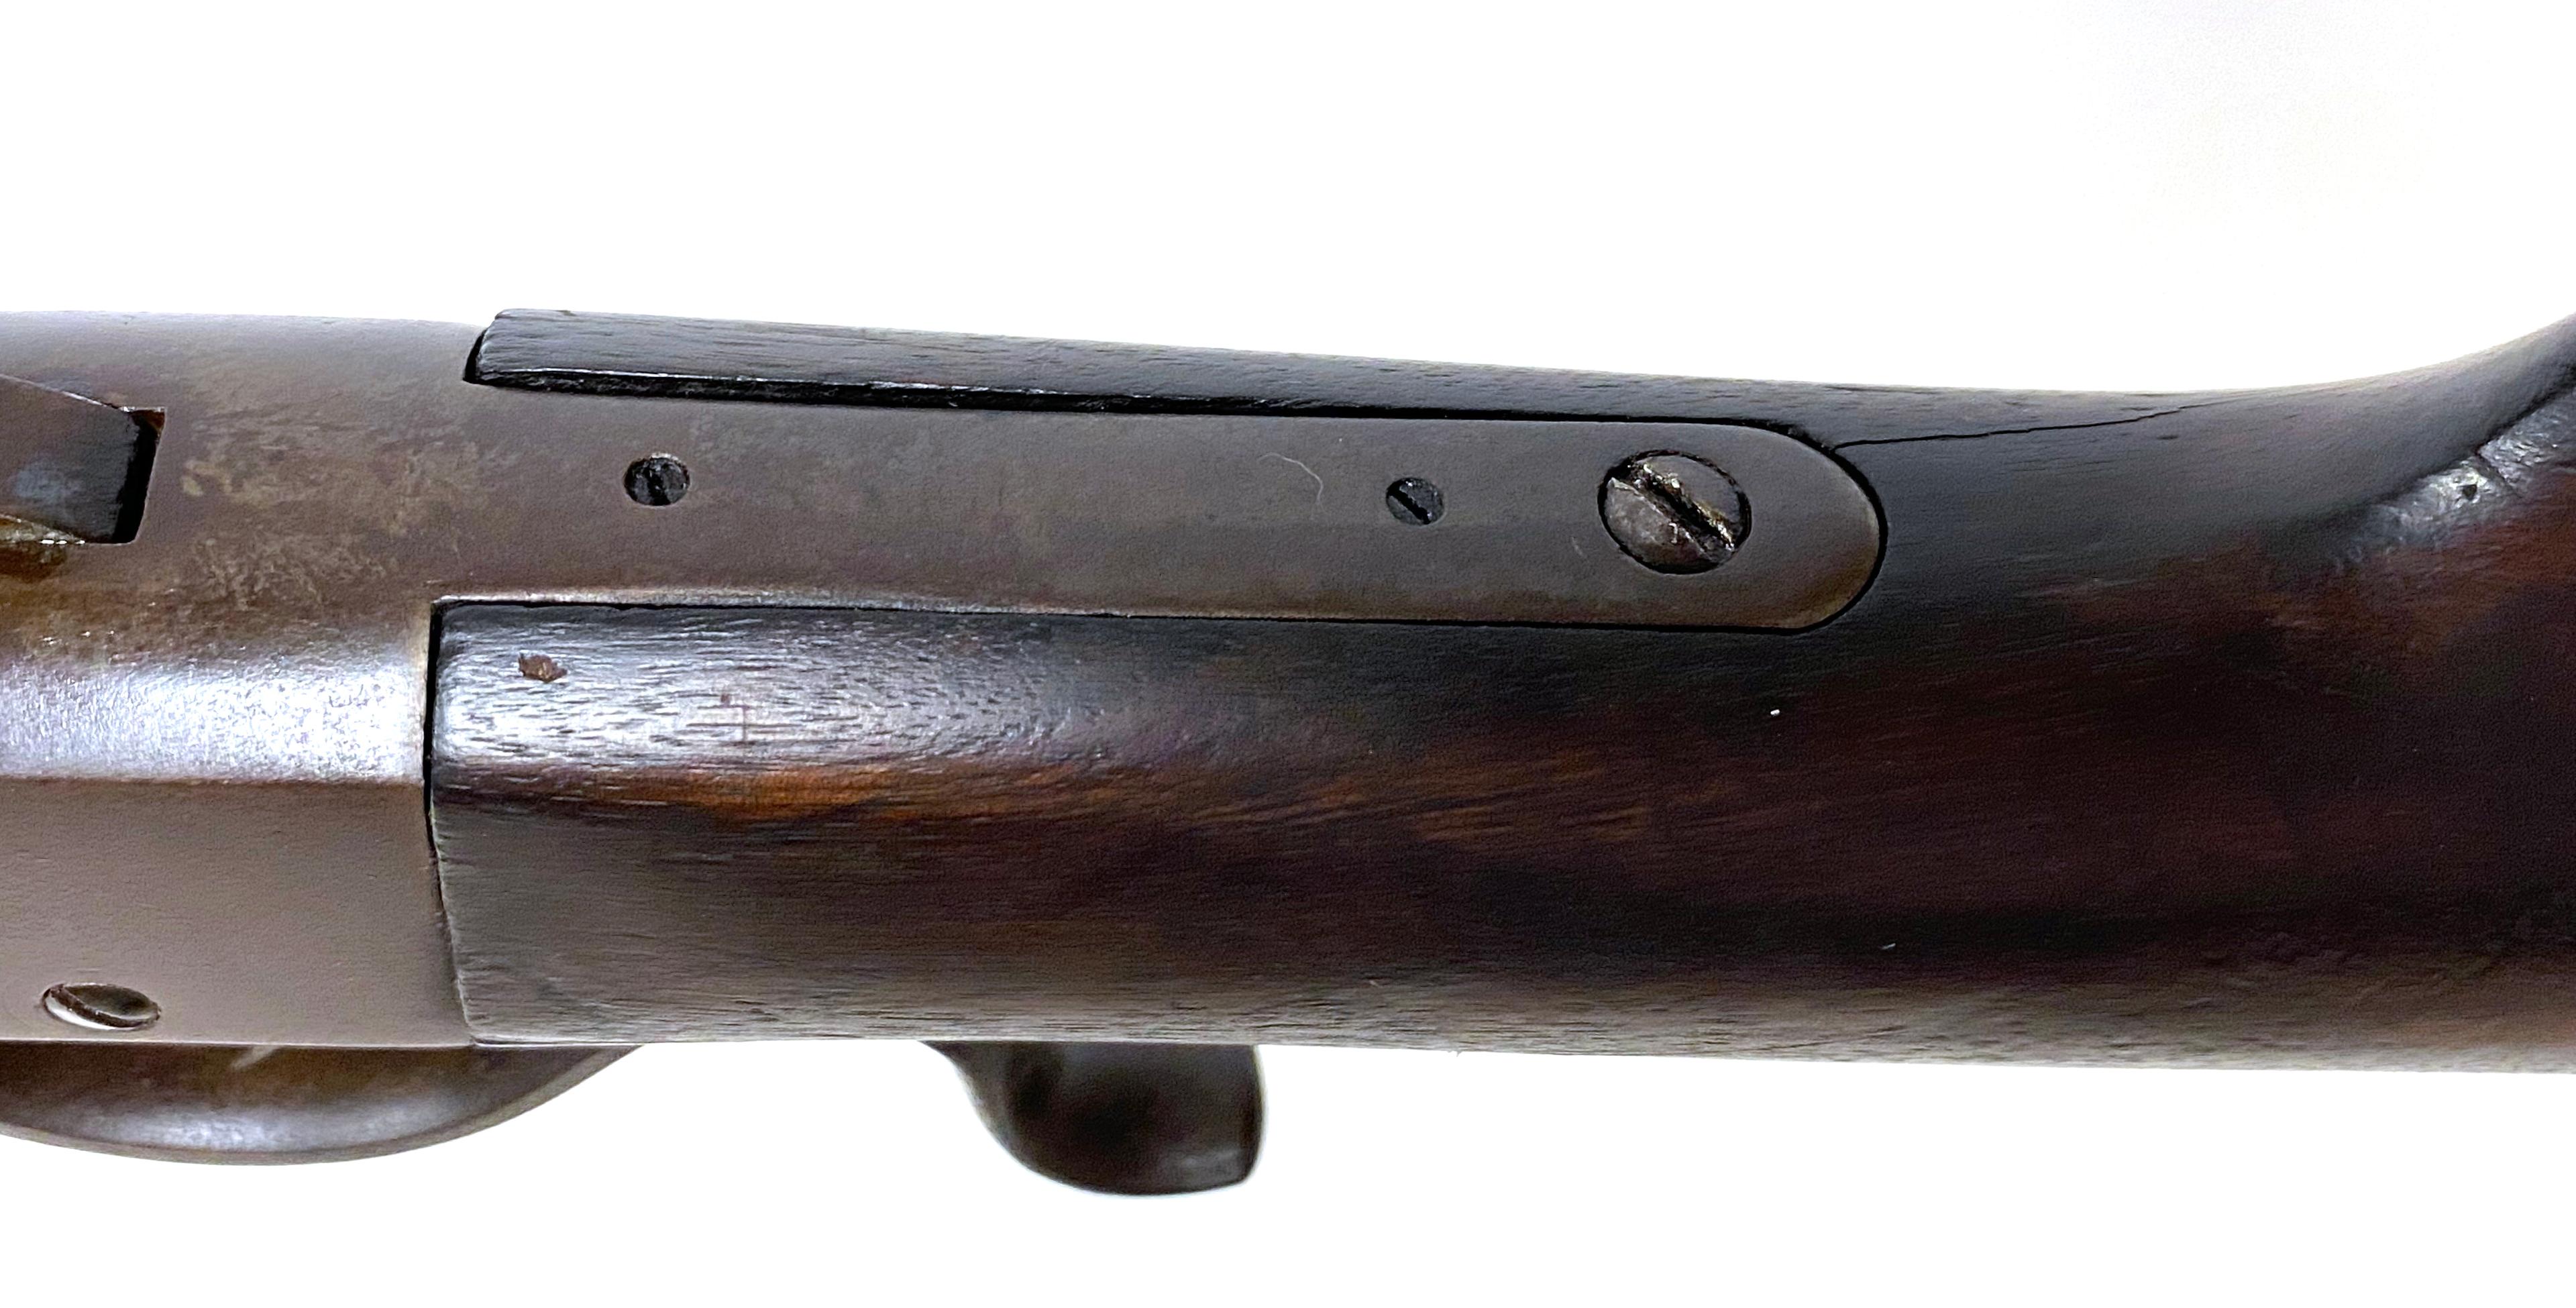 Stevens "Ideal" No. 44 .25 RF Single-Shot Falling Block Lever Rifle